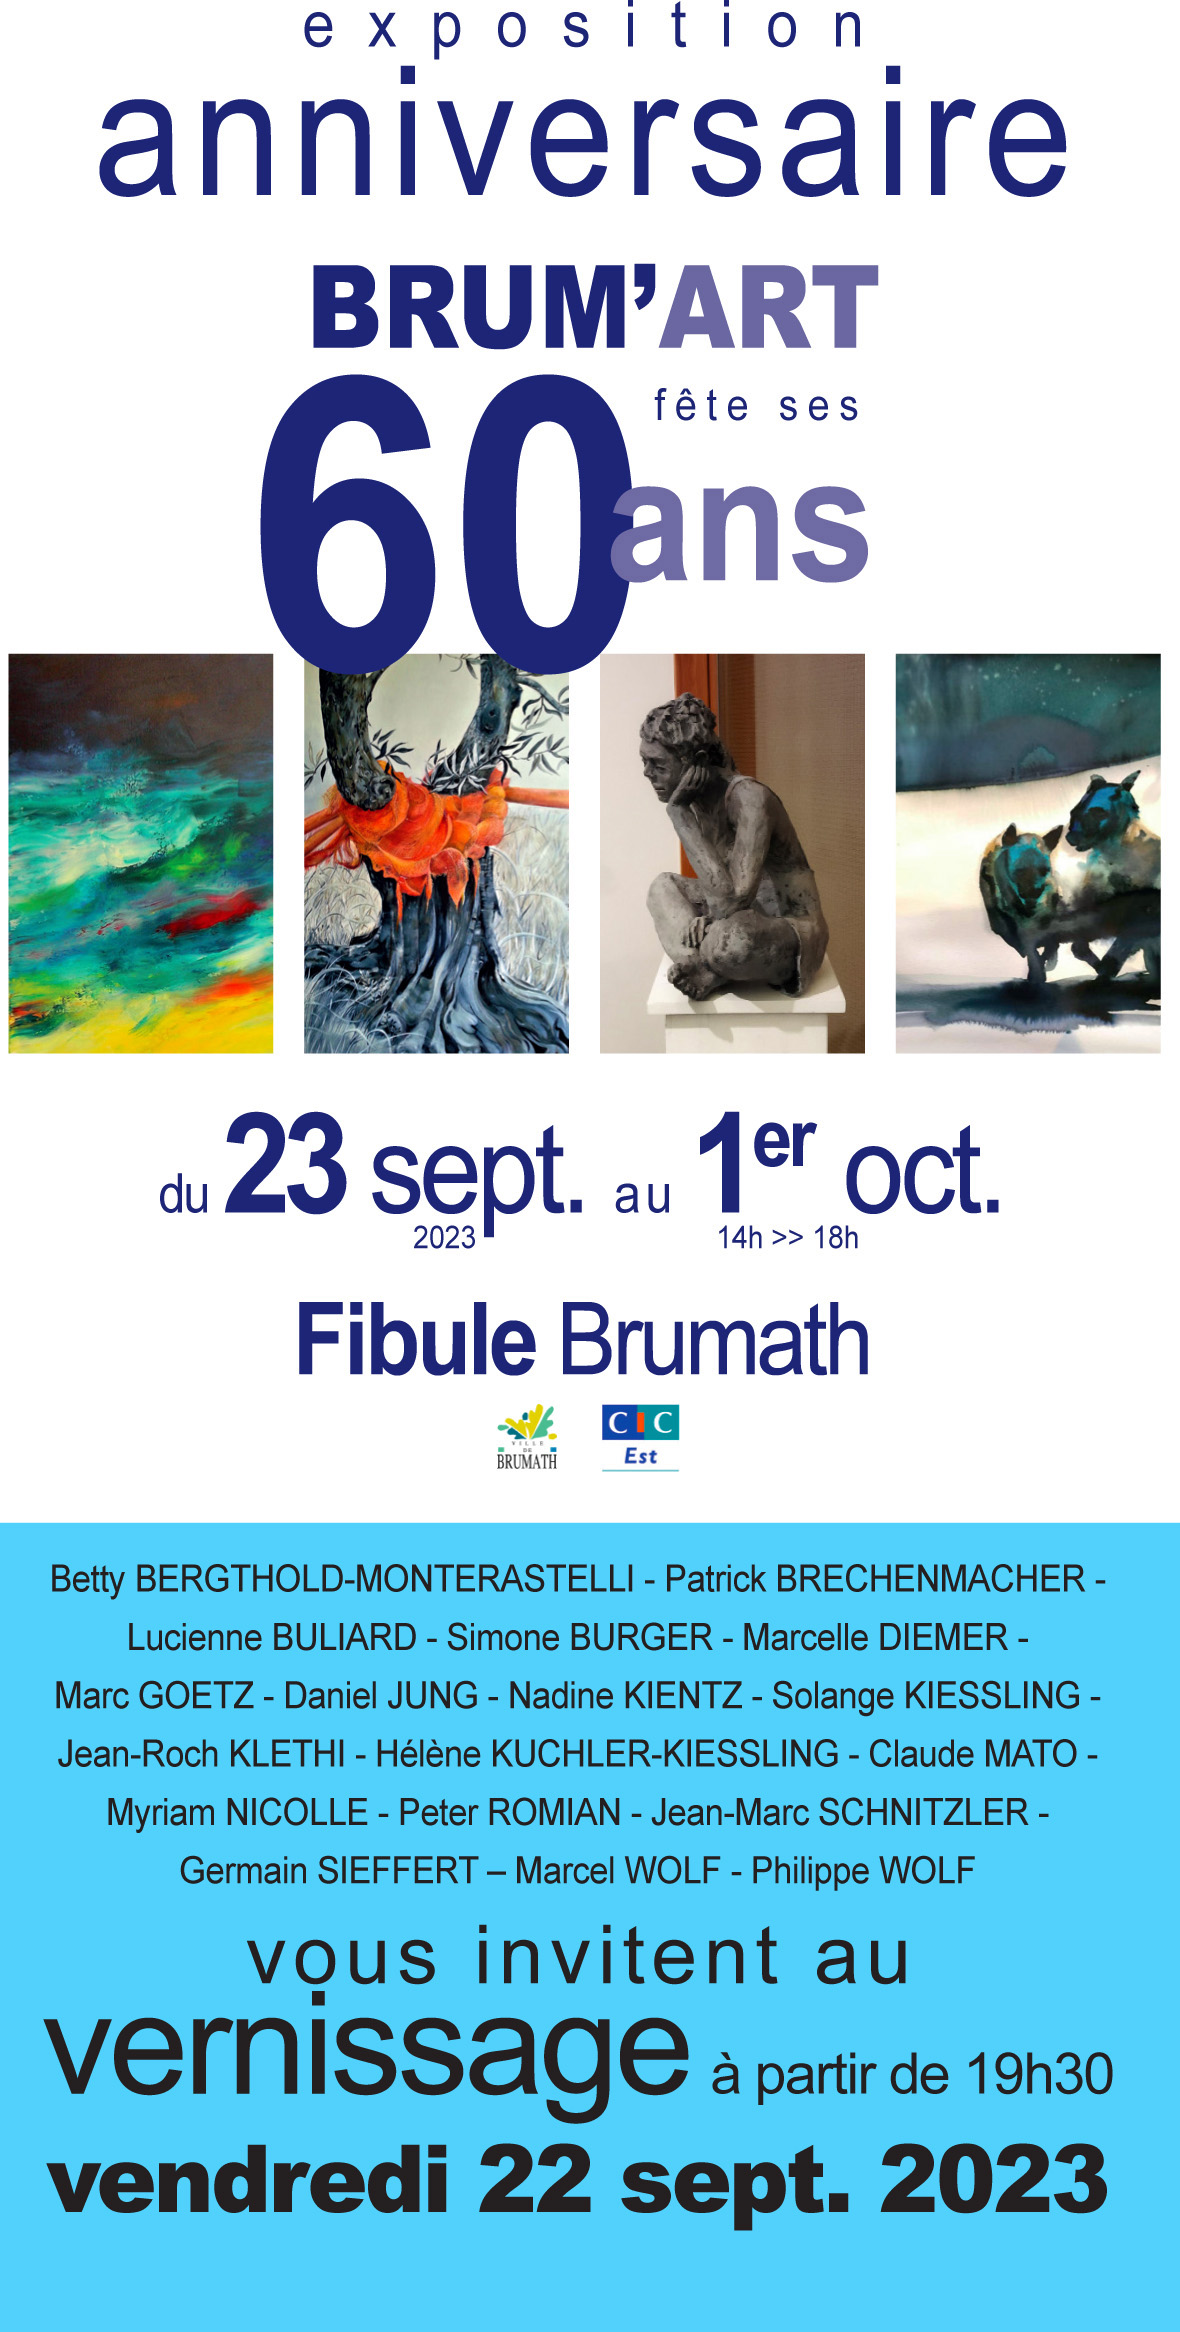 Exposition « Brum’art fête ses 60 ans »